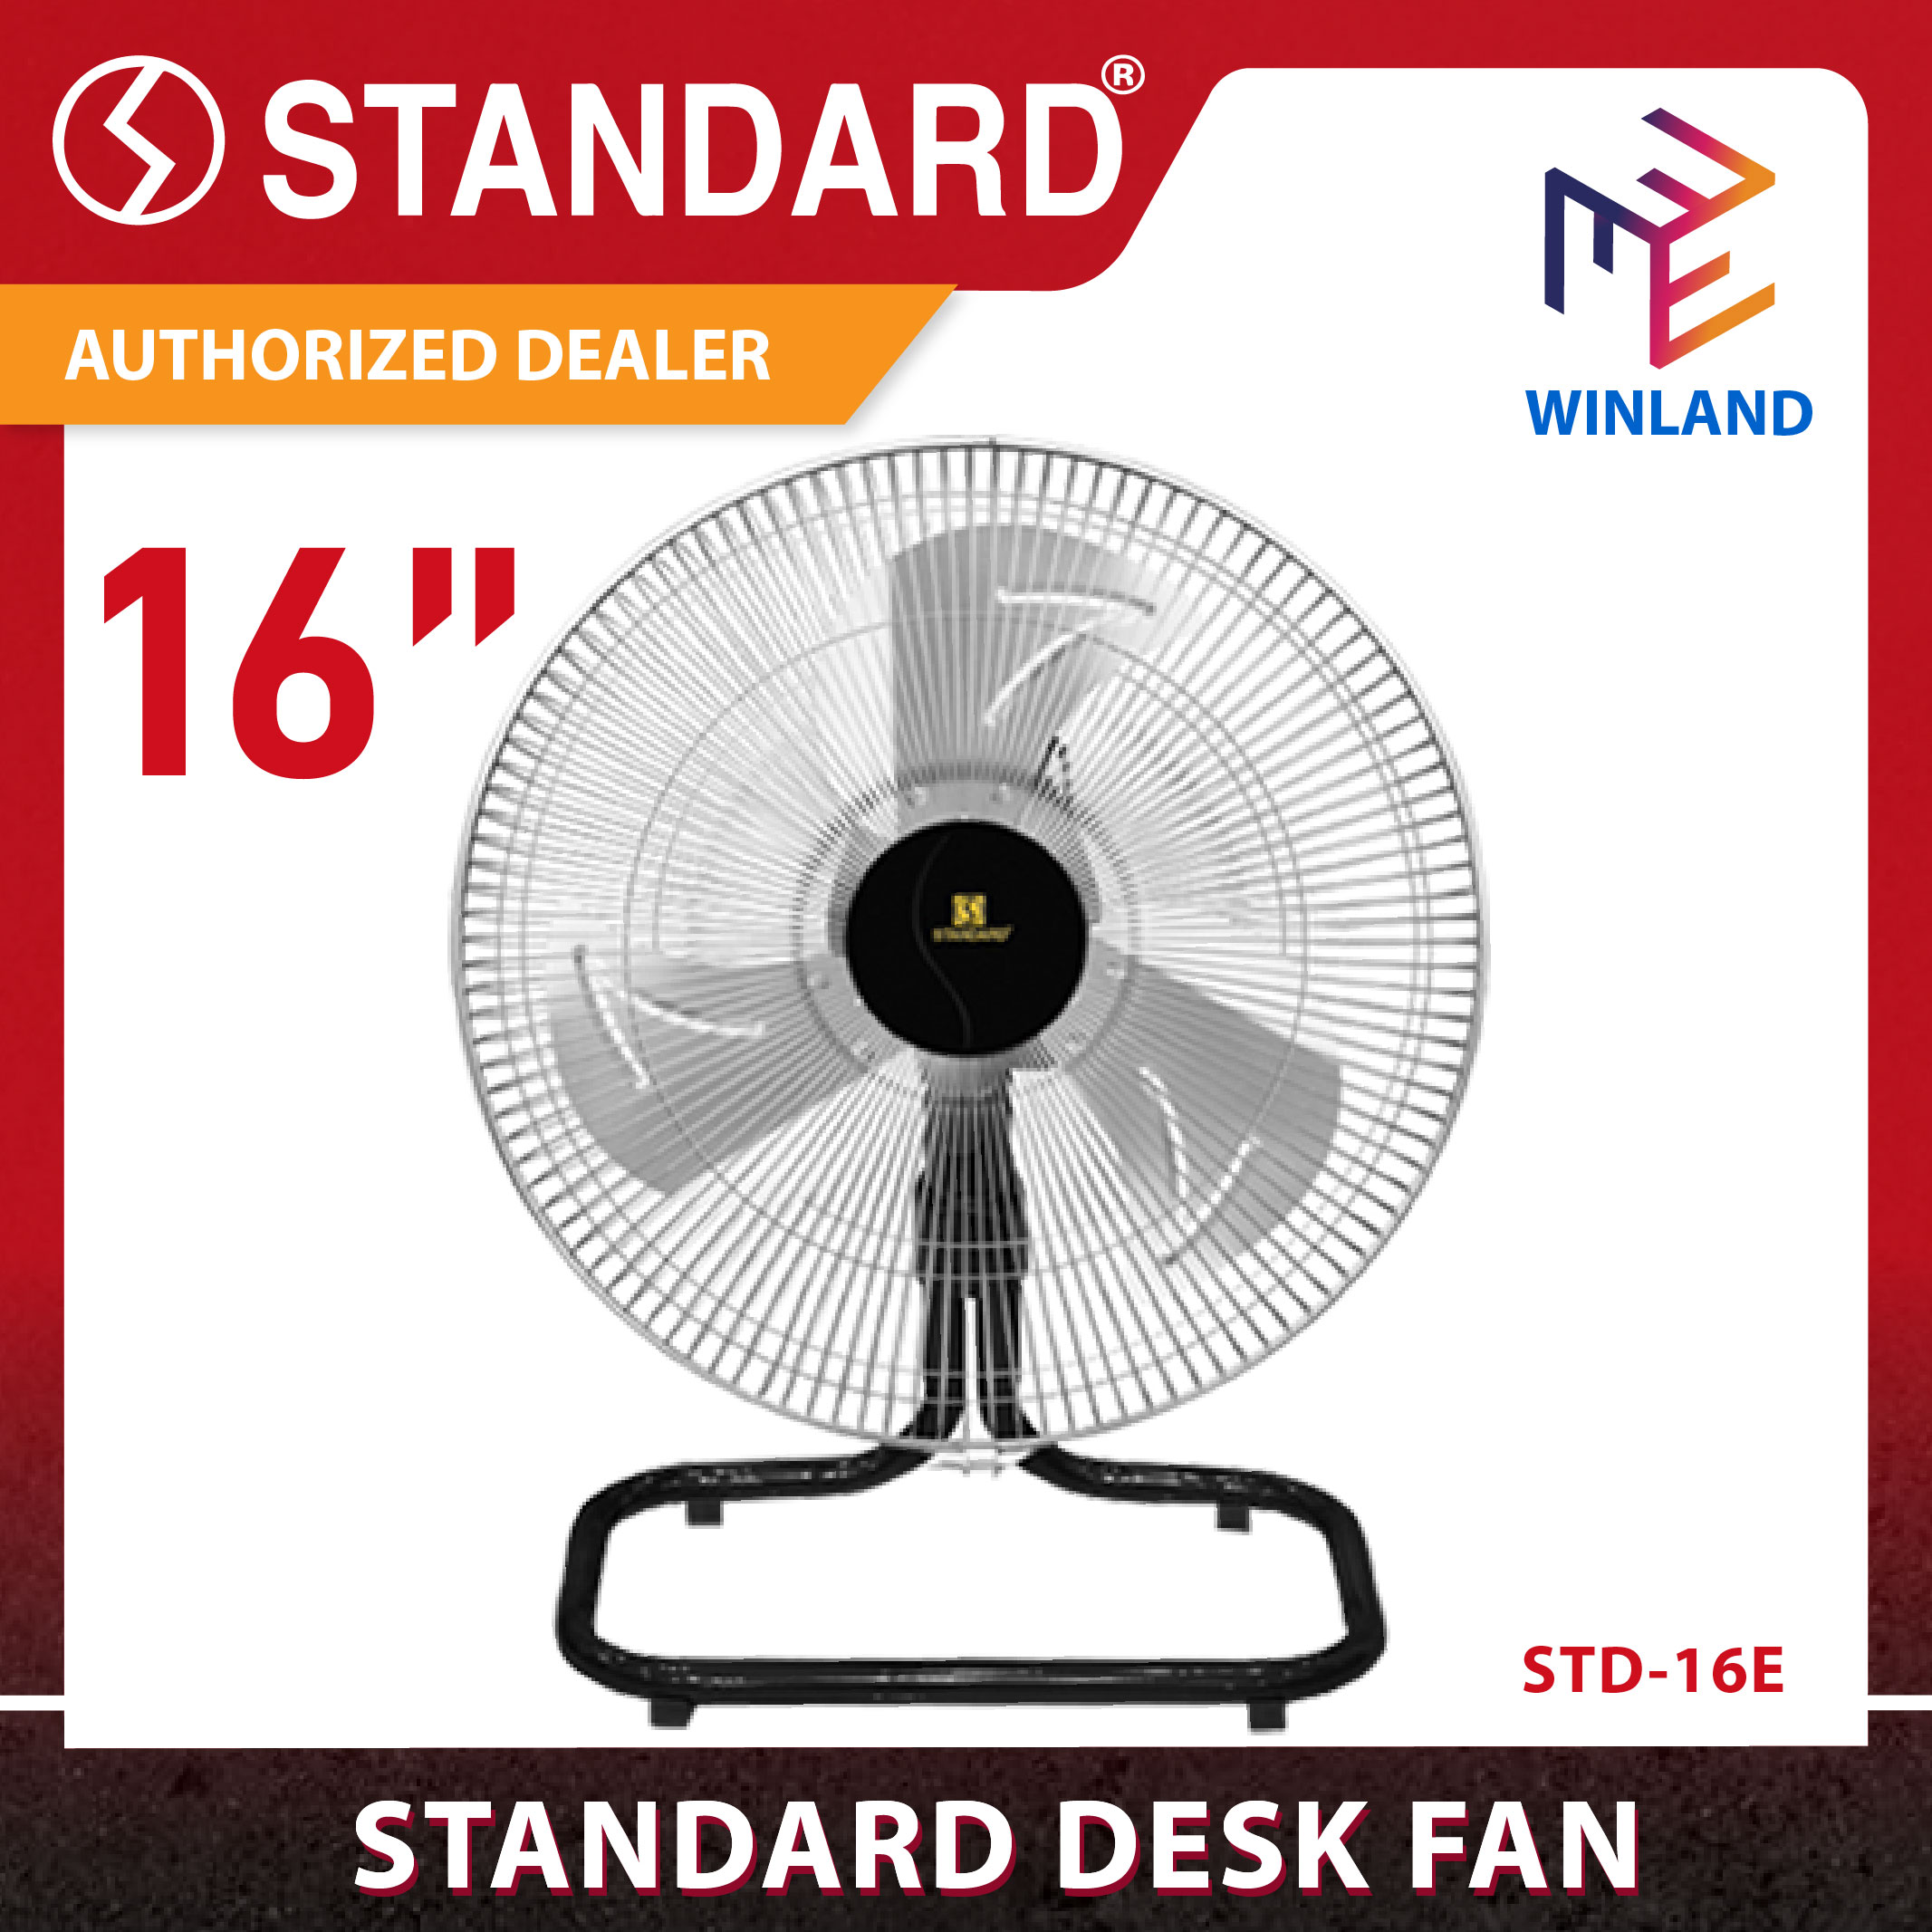 Winland Terminator Desk Fan - STD-16E